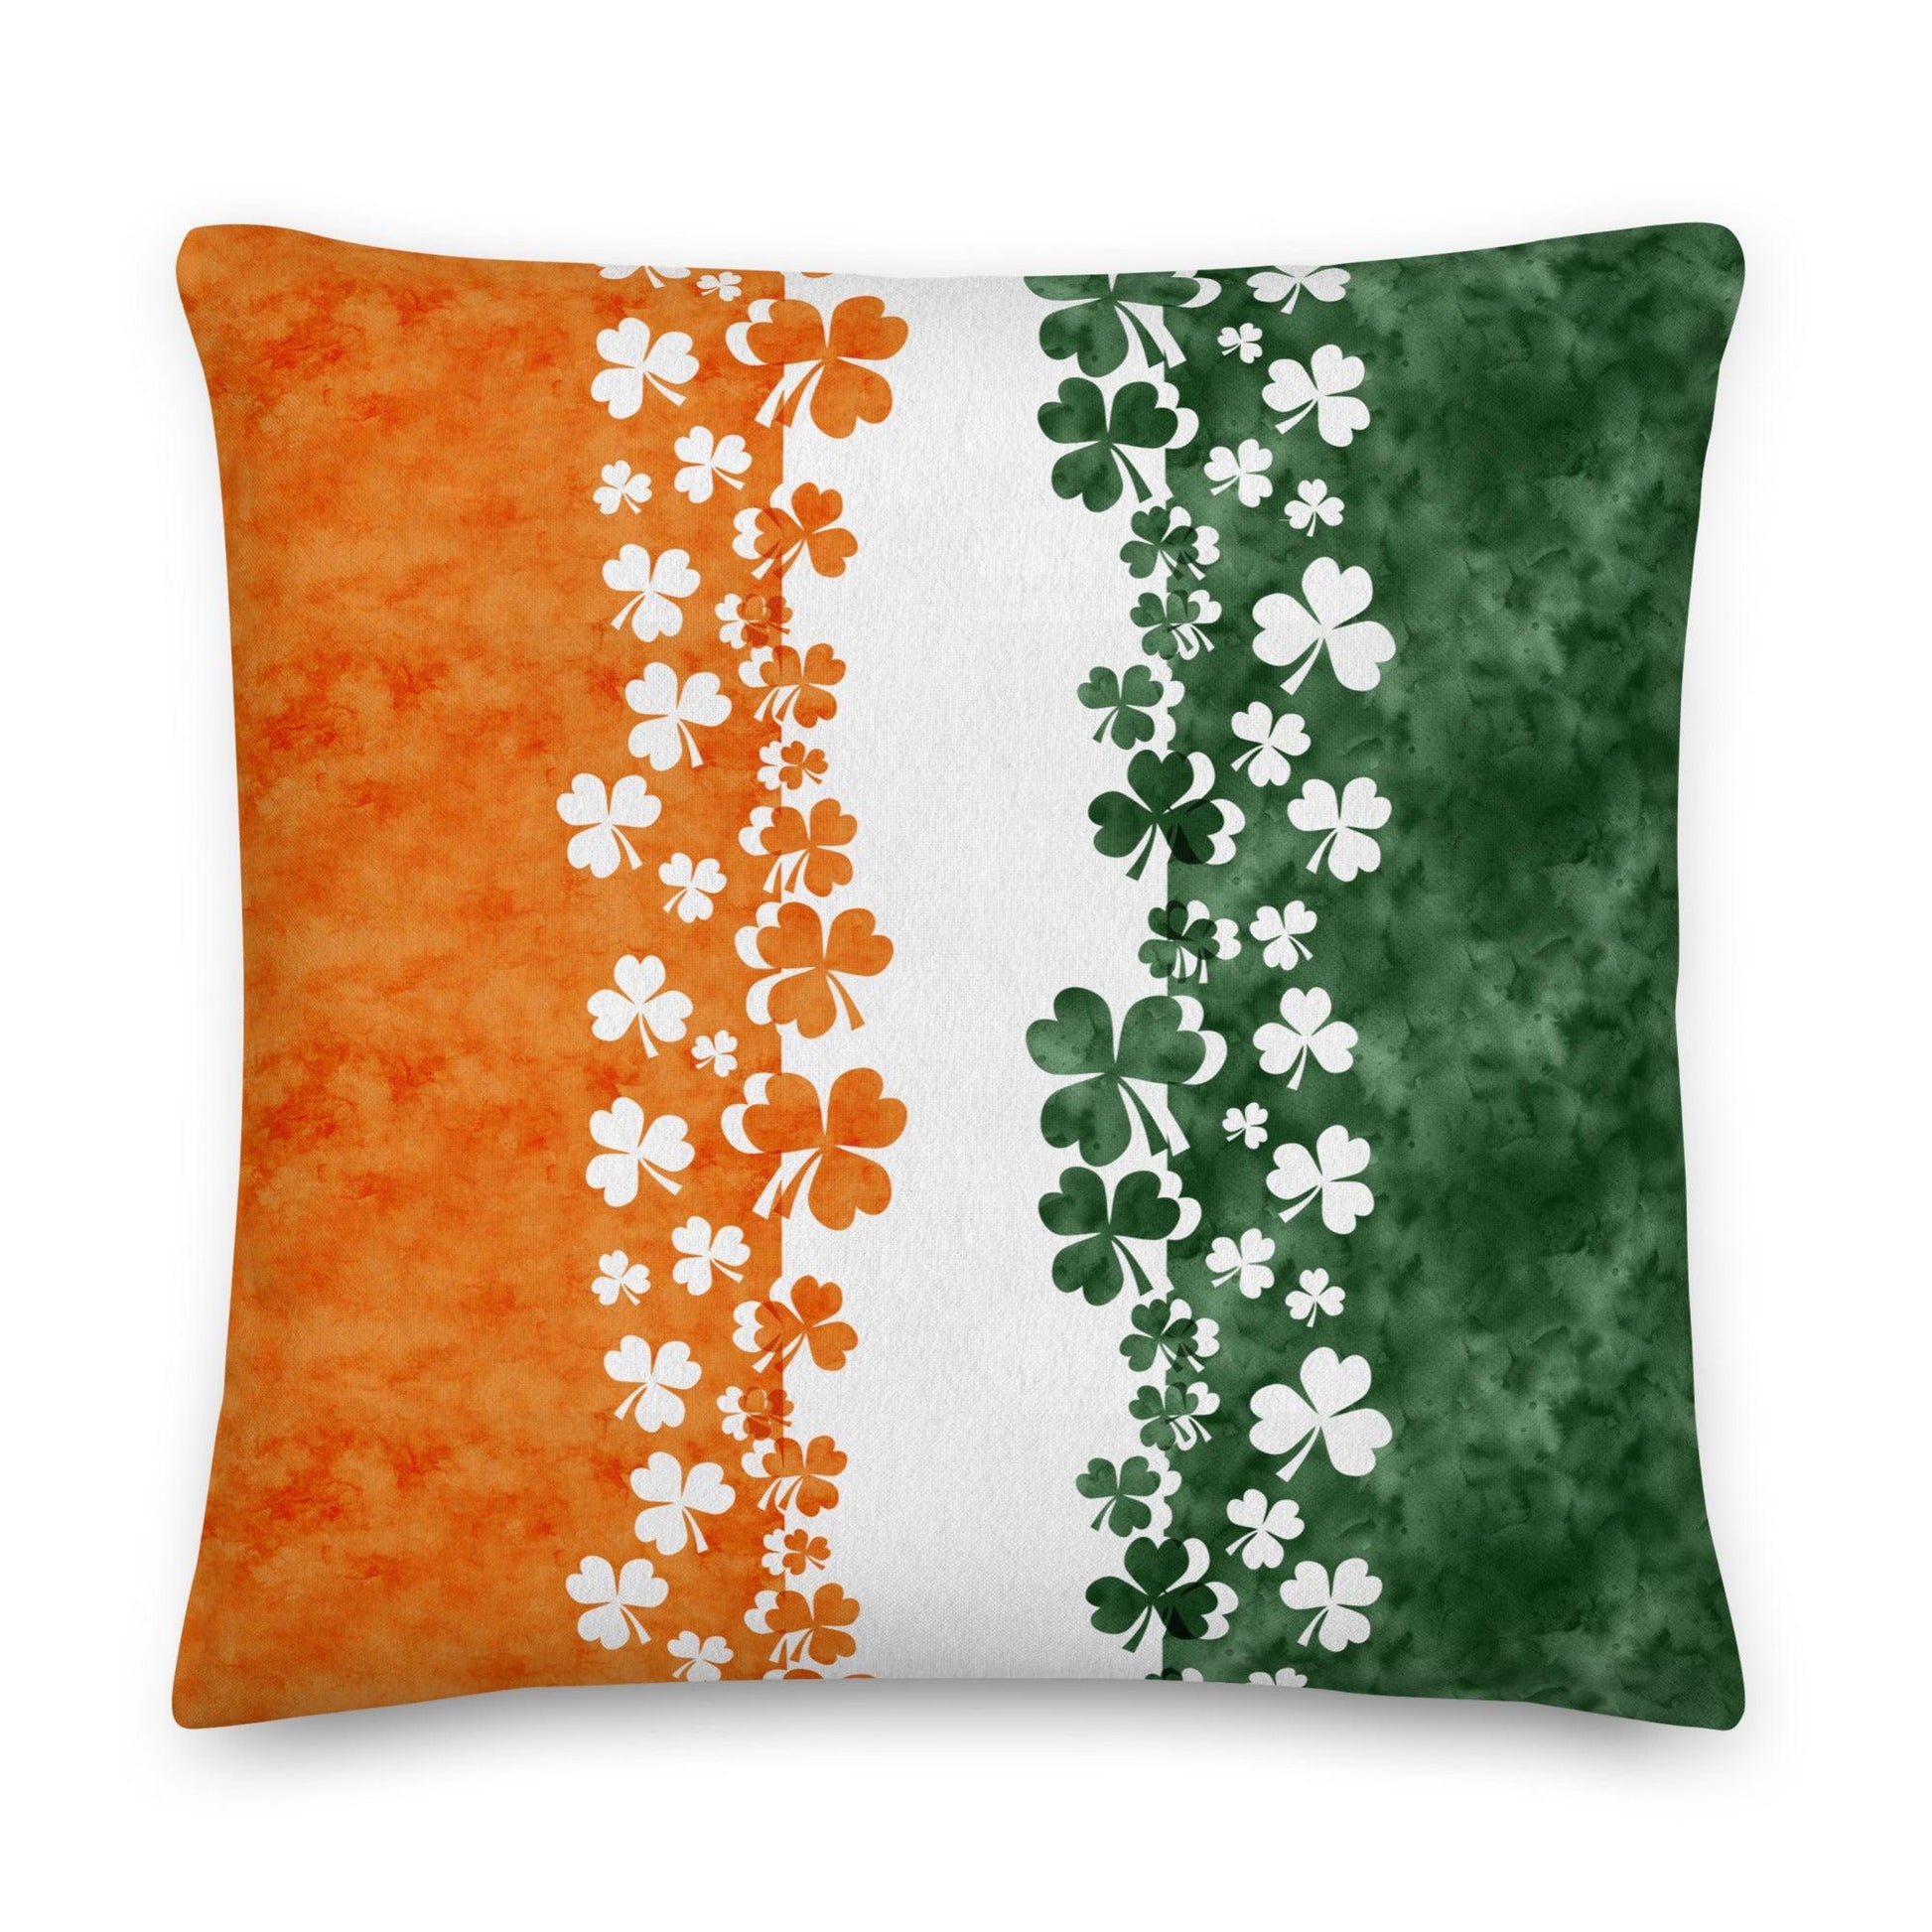 Irish Shamrock Throw Pillow - The Global Wanderer